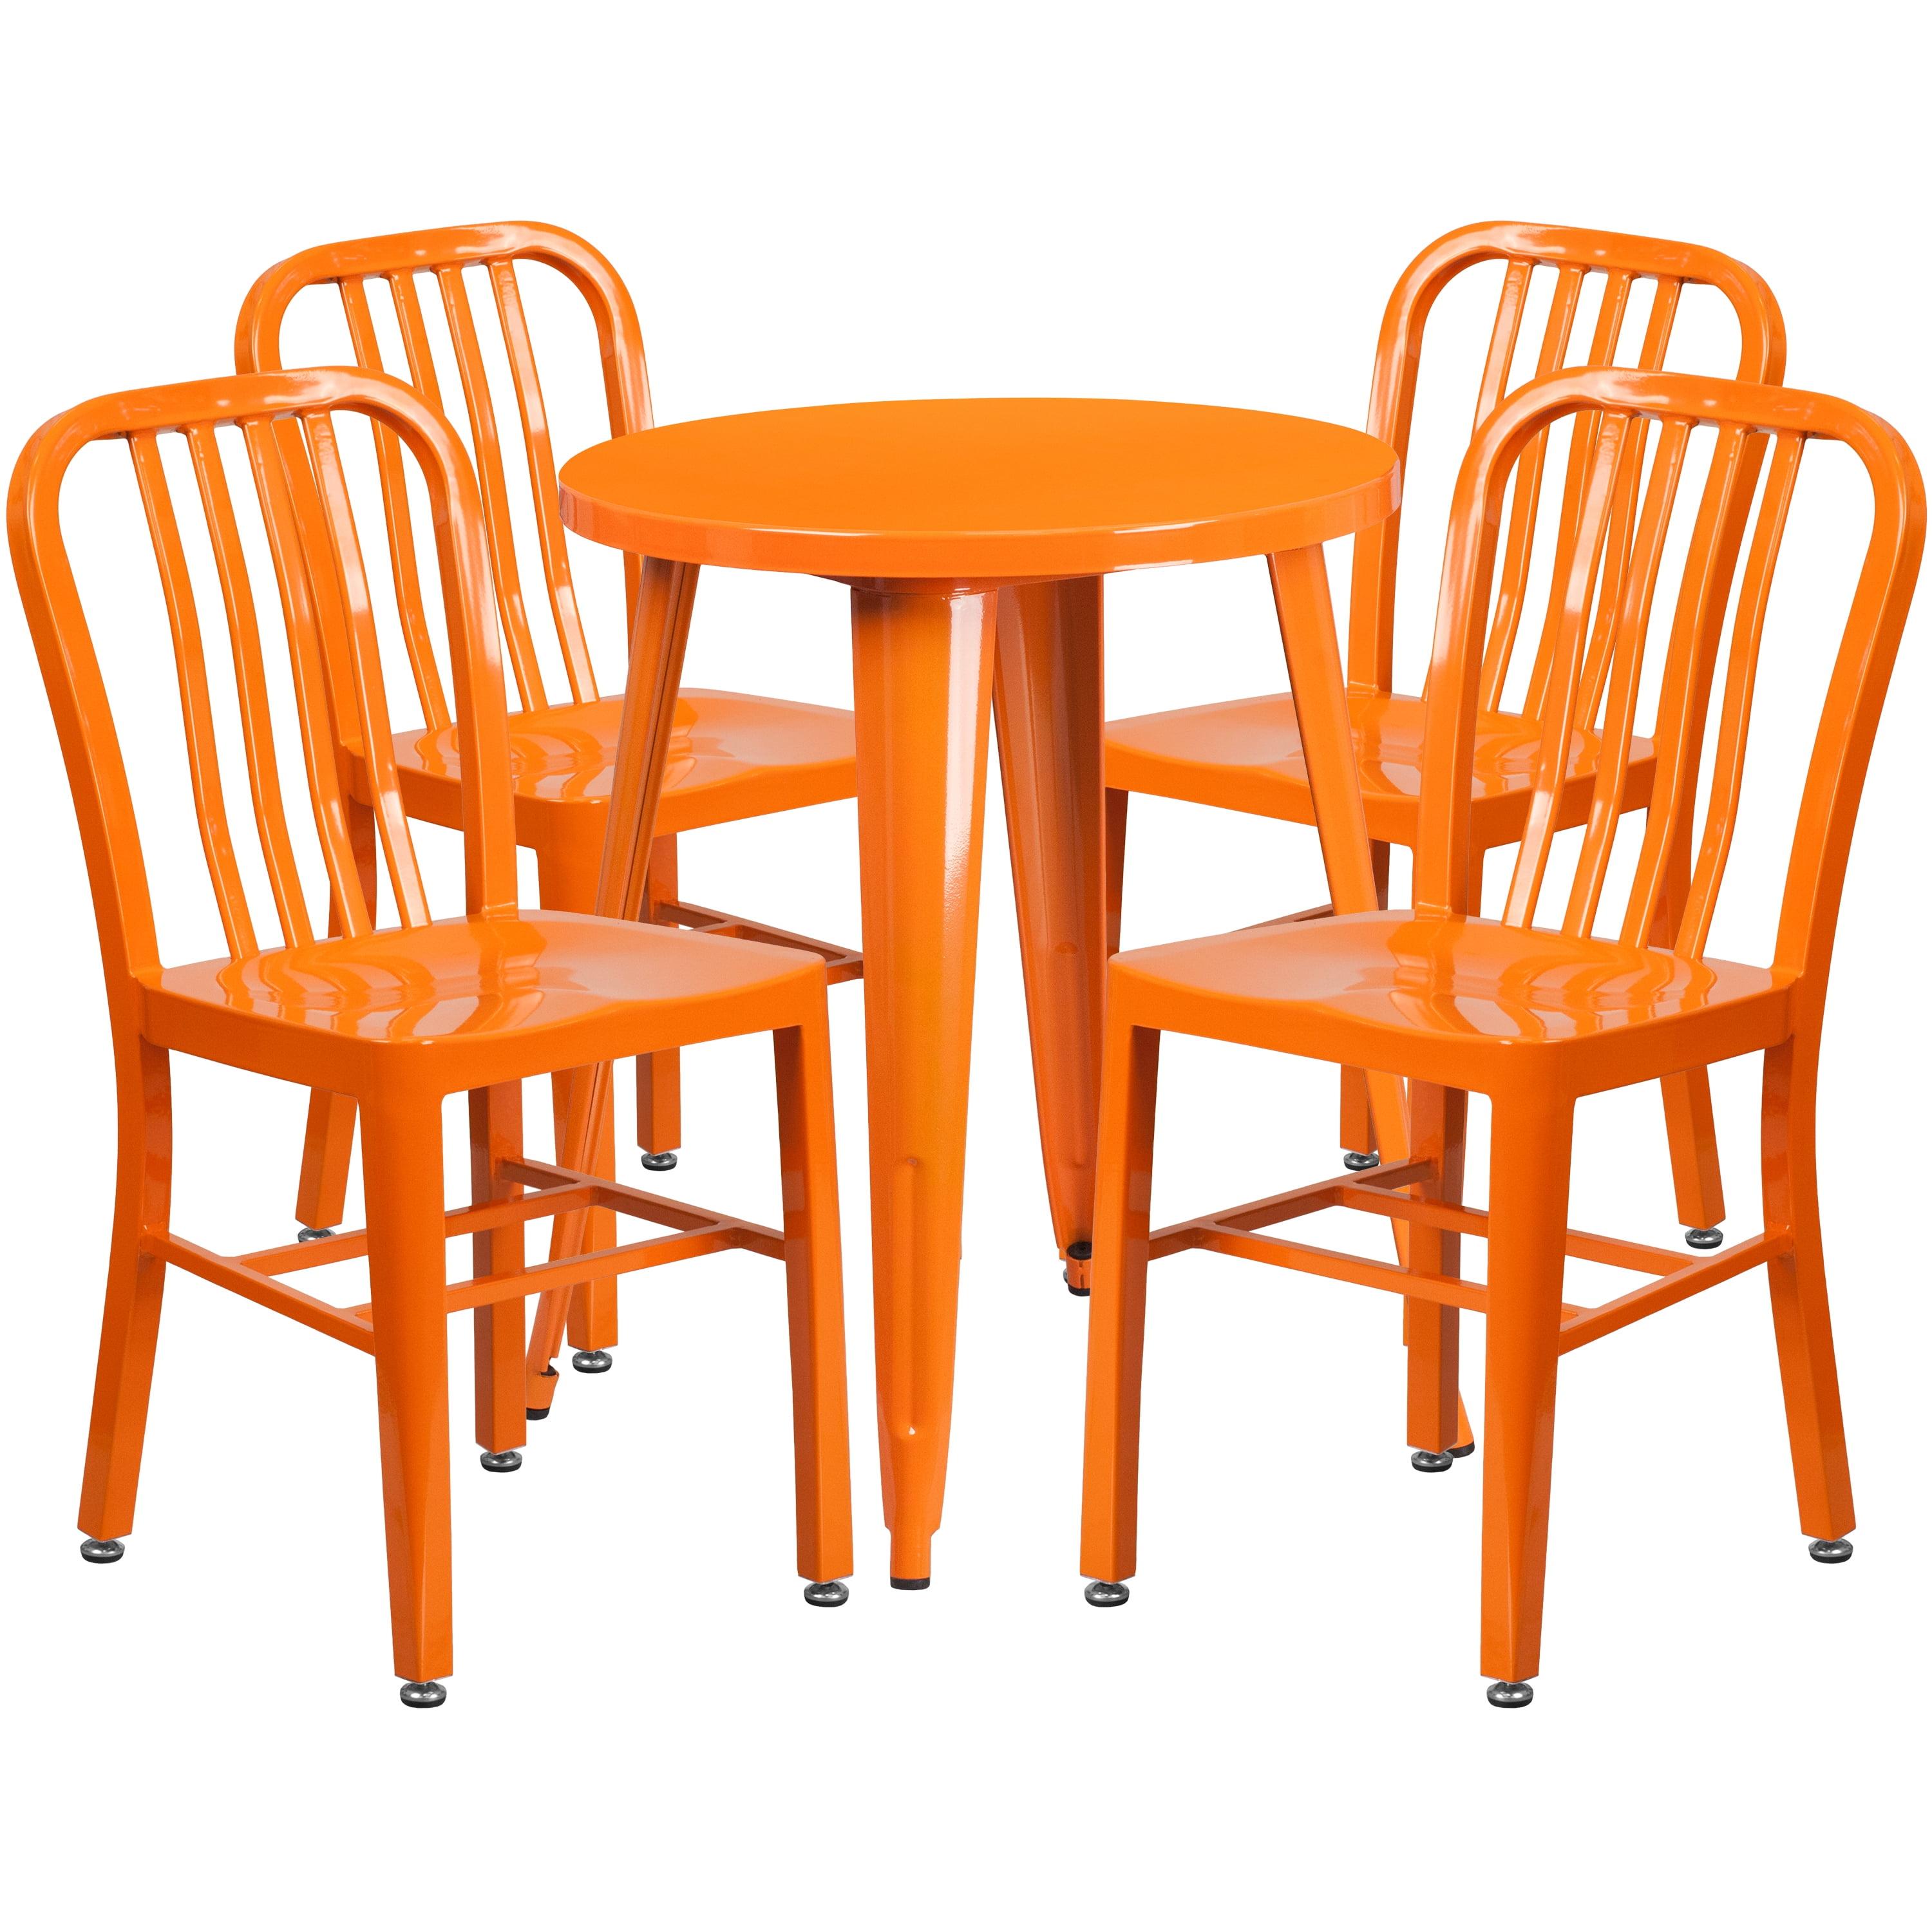 29" Round Orange Metal Bistro Set with Vertical Slat Chairs